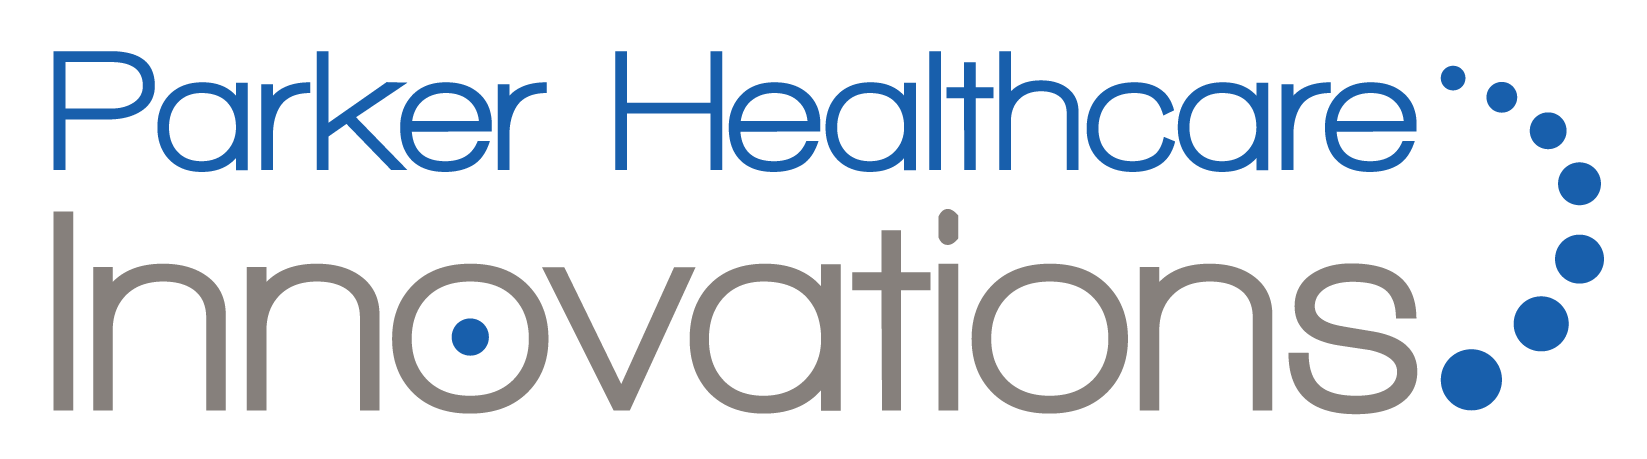 Parker-Healthcare-Innovations-logo.png